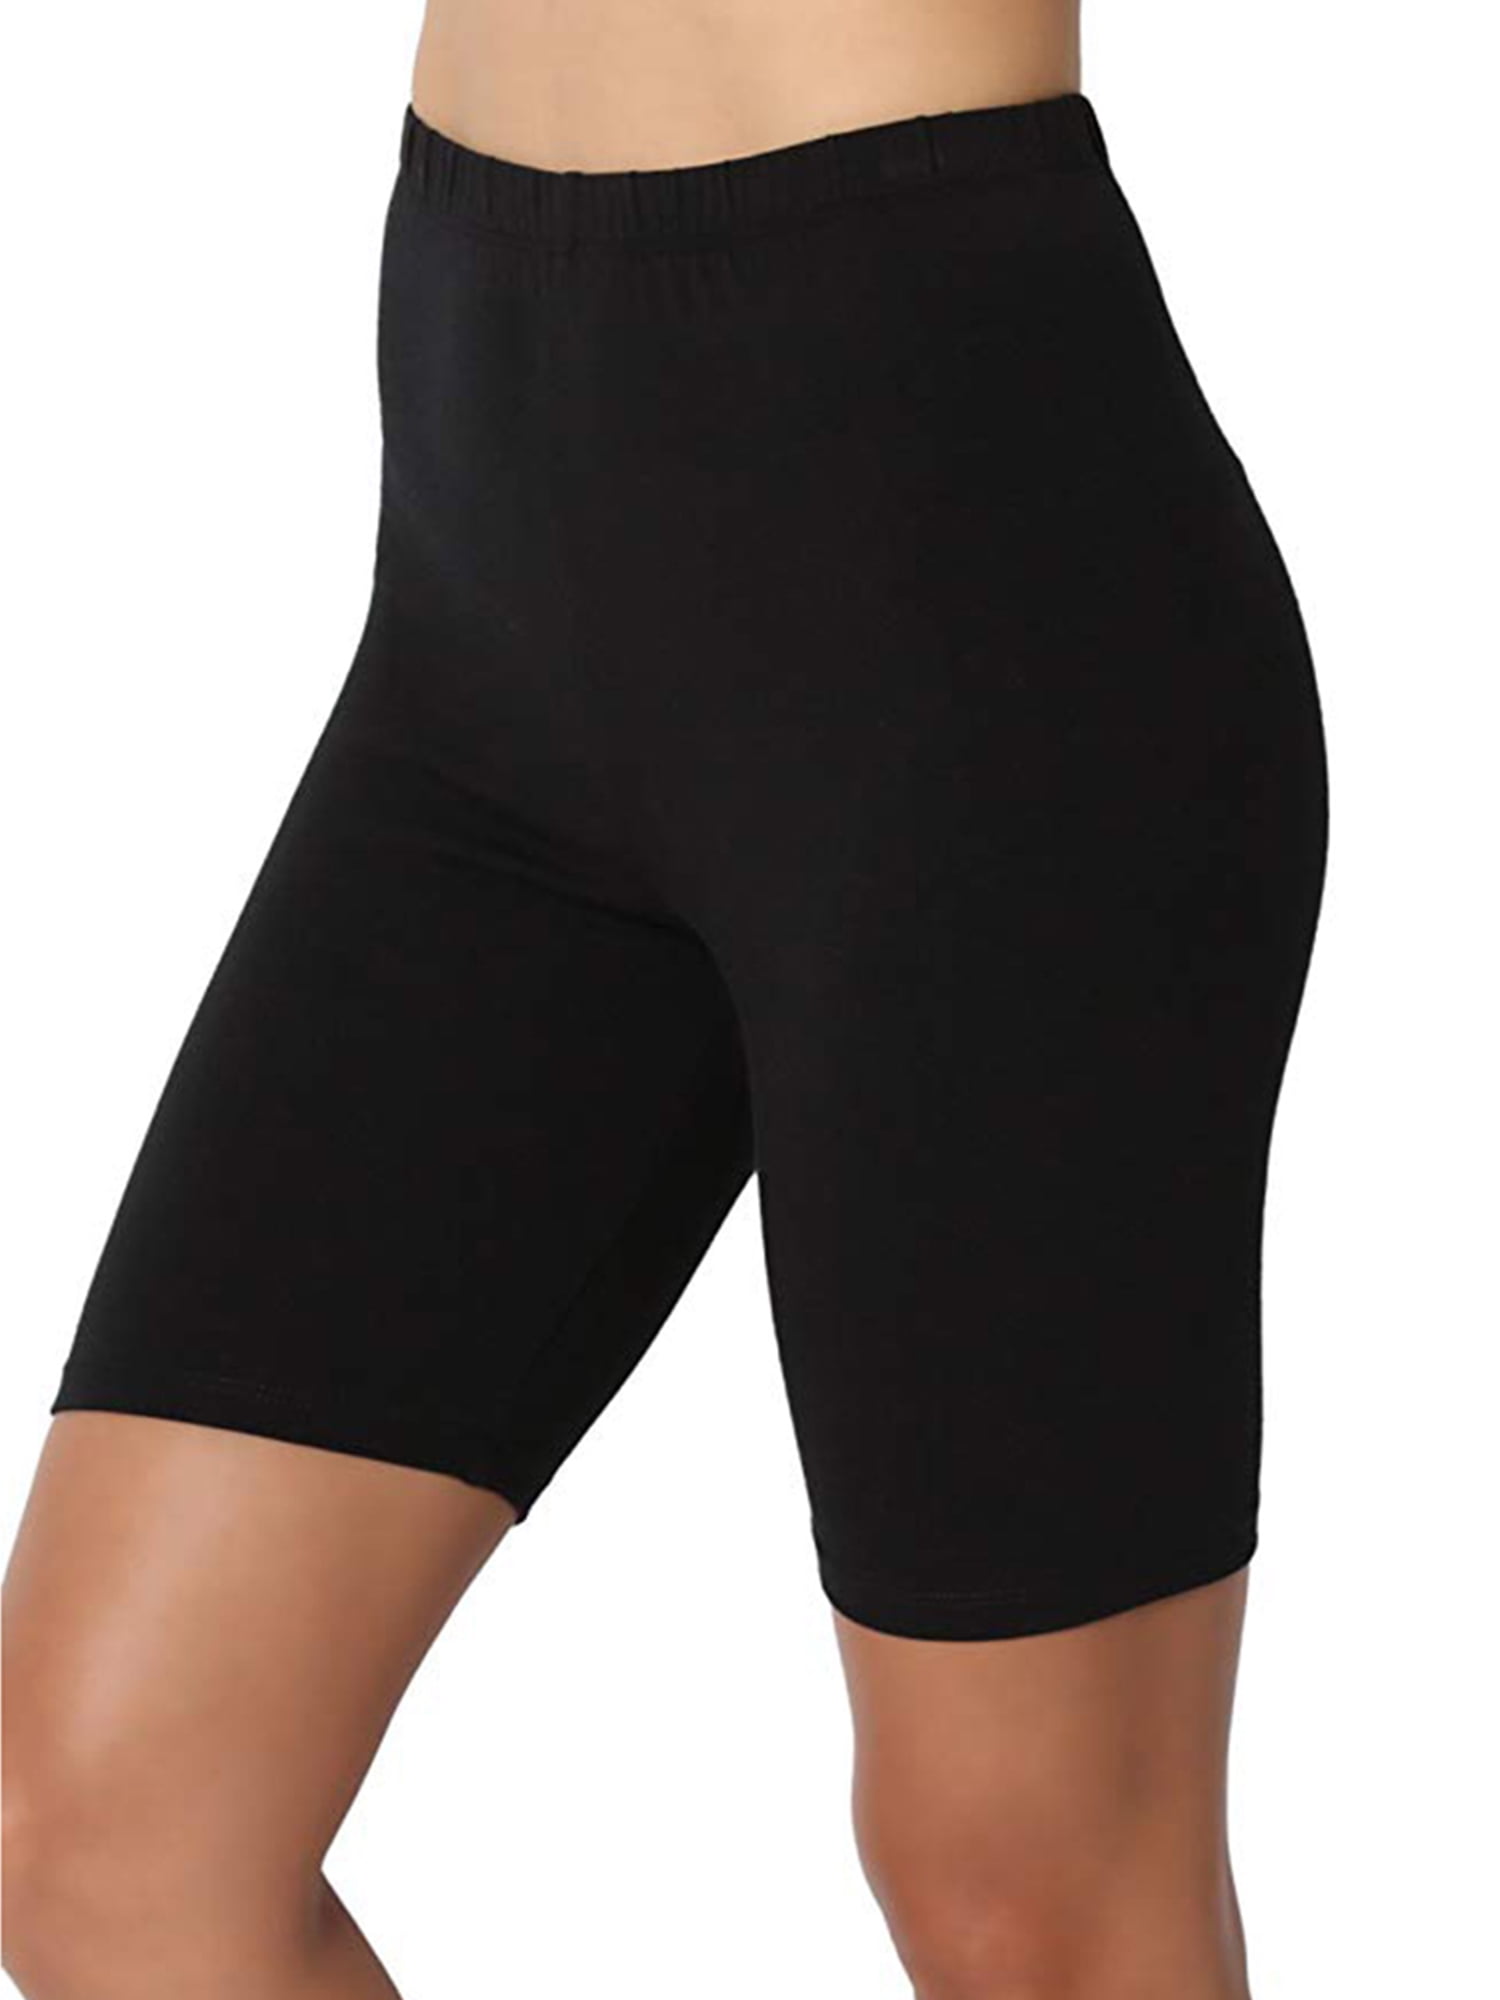 New Ladies Cycling Short Dancing Legging Active Casual Gym Stretchy Grey Shorts 